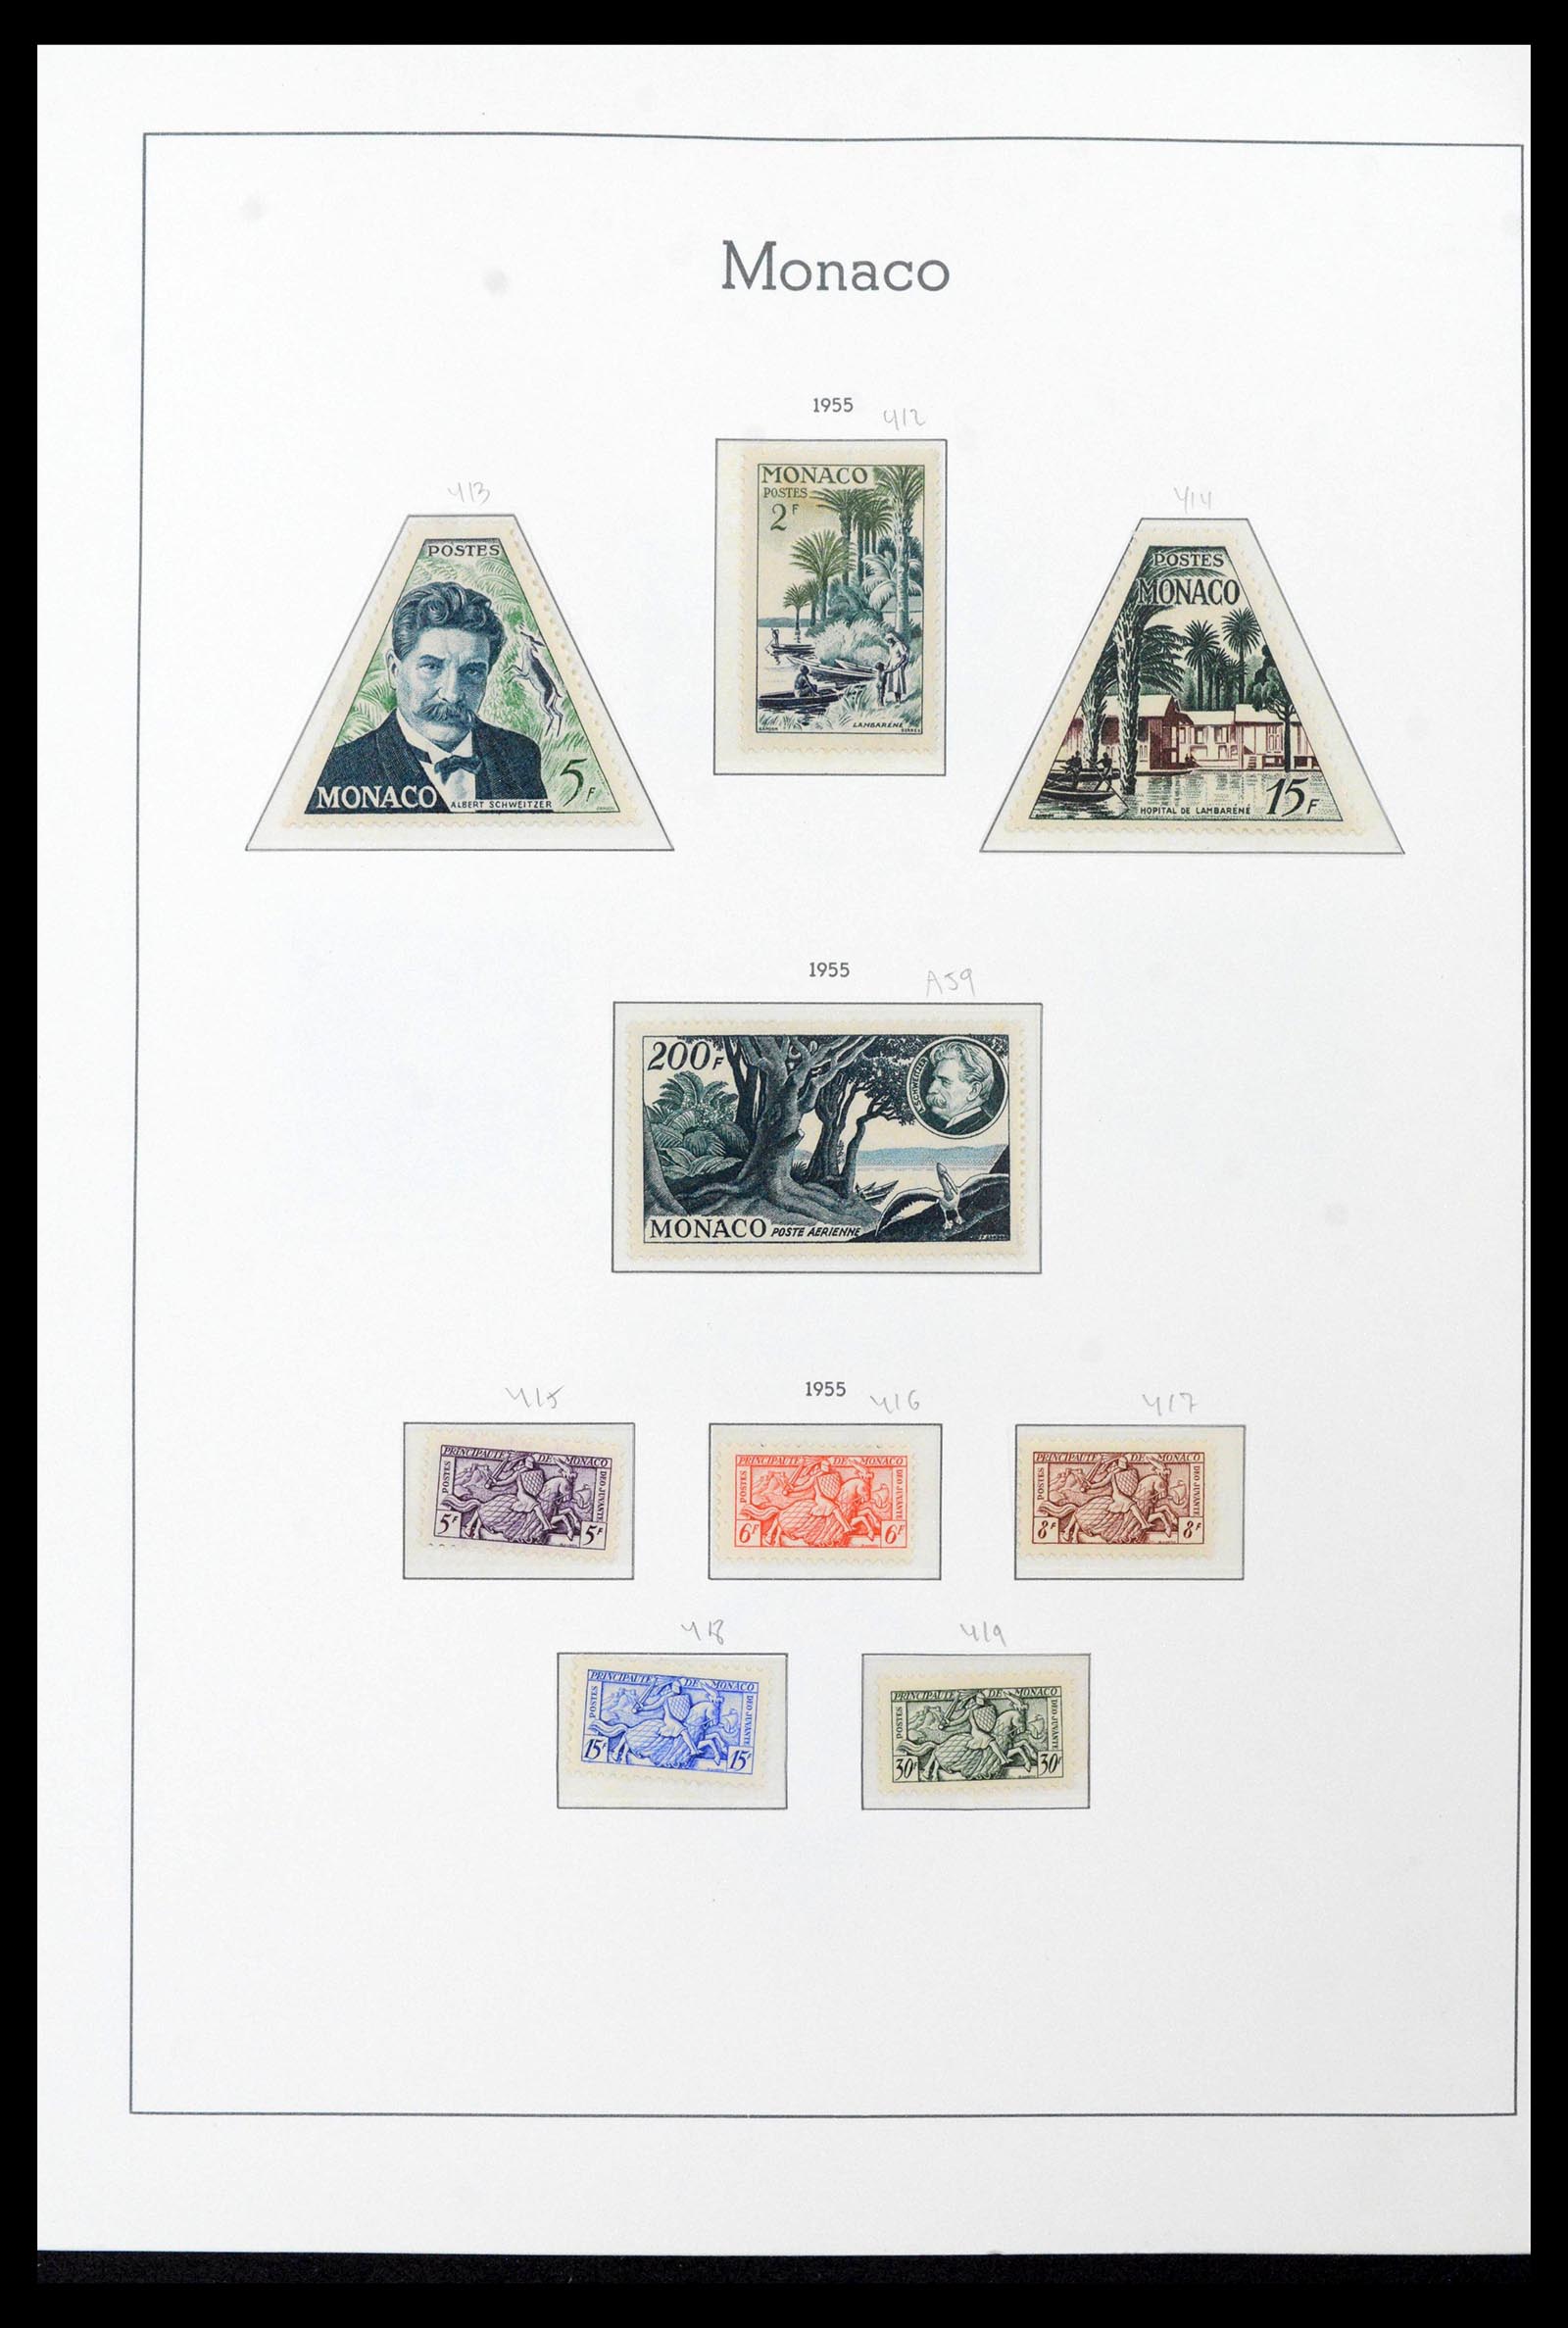 39250 0057 - Stamp collection 39250 Monaco 1885-1995.